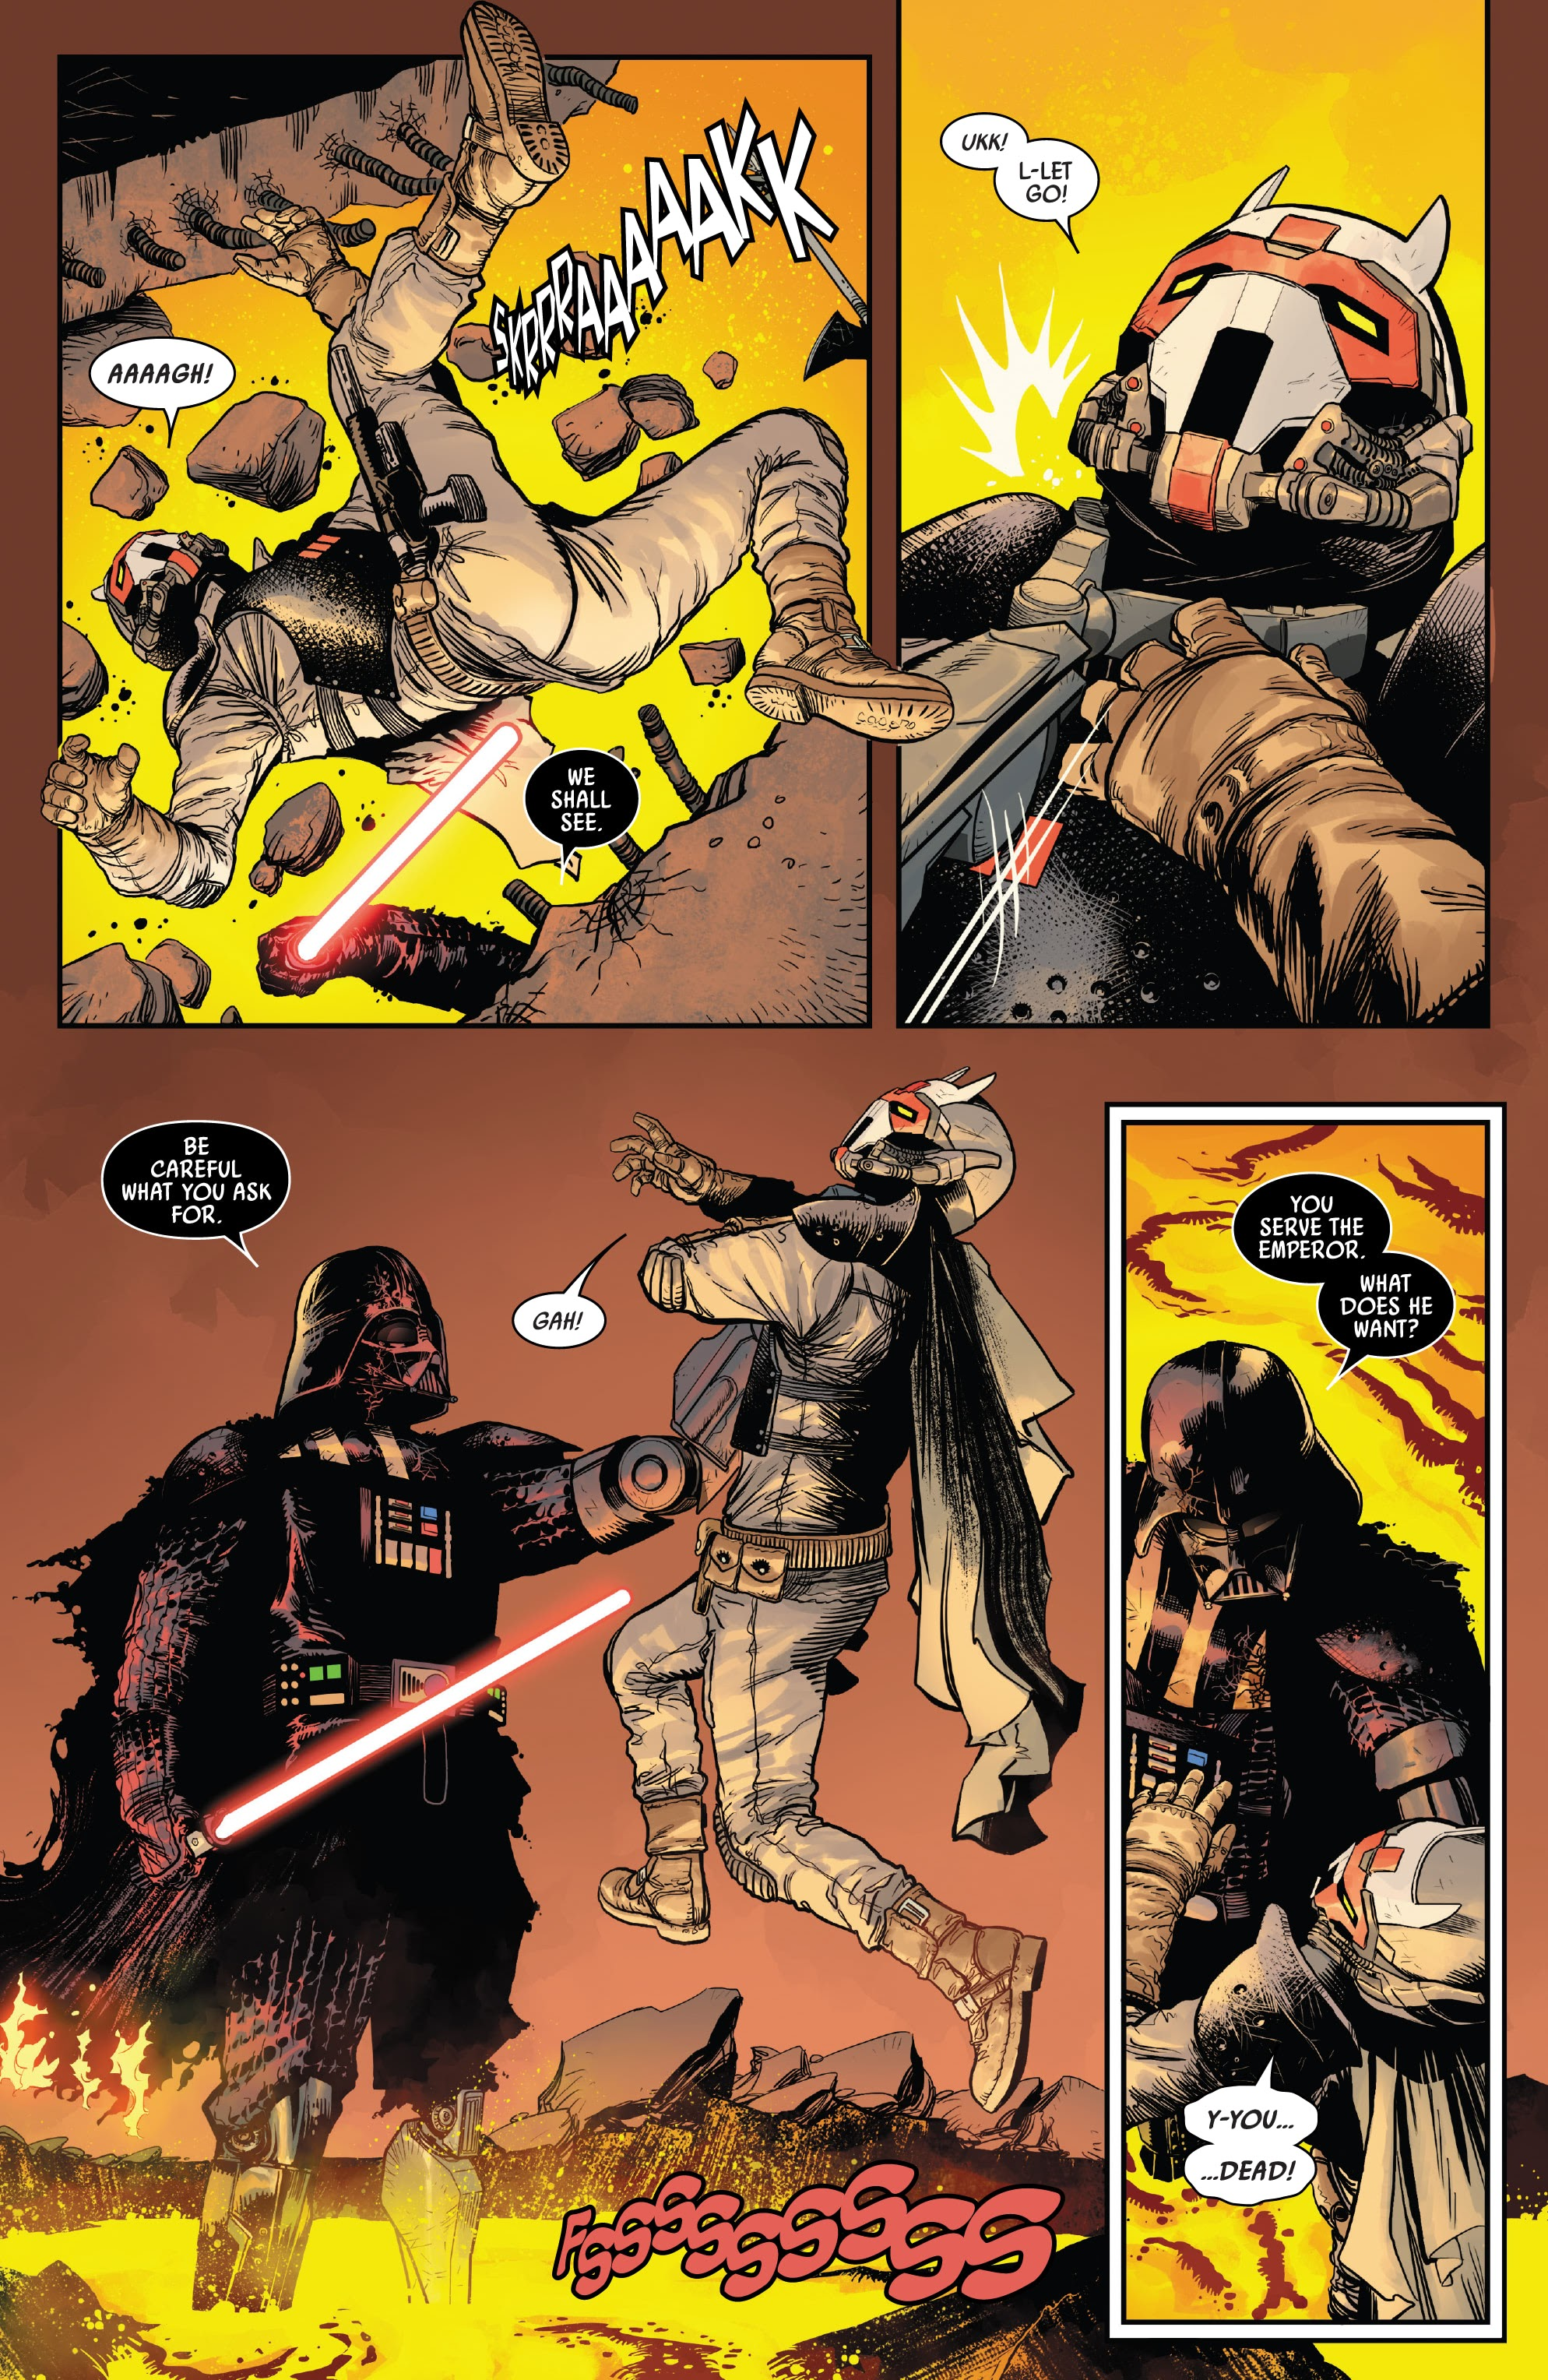 Marvel’s Darth Vader Comic Is Building on Mustafar’s Mystic Rise of Skywalker Shadow